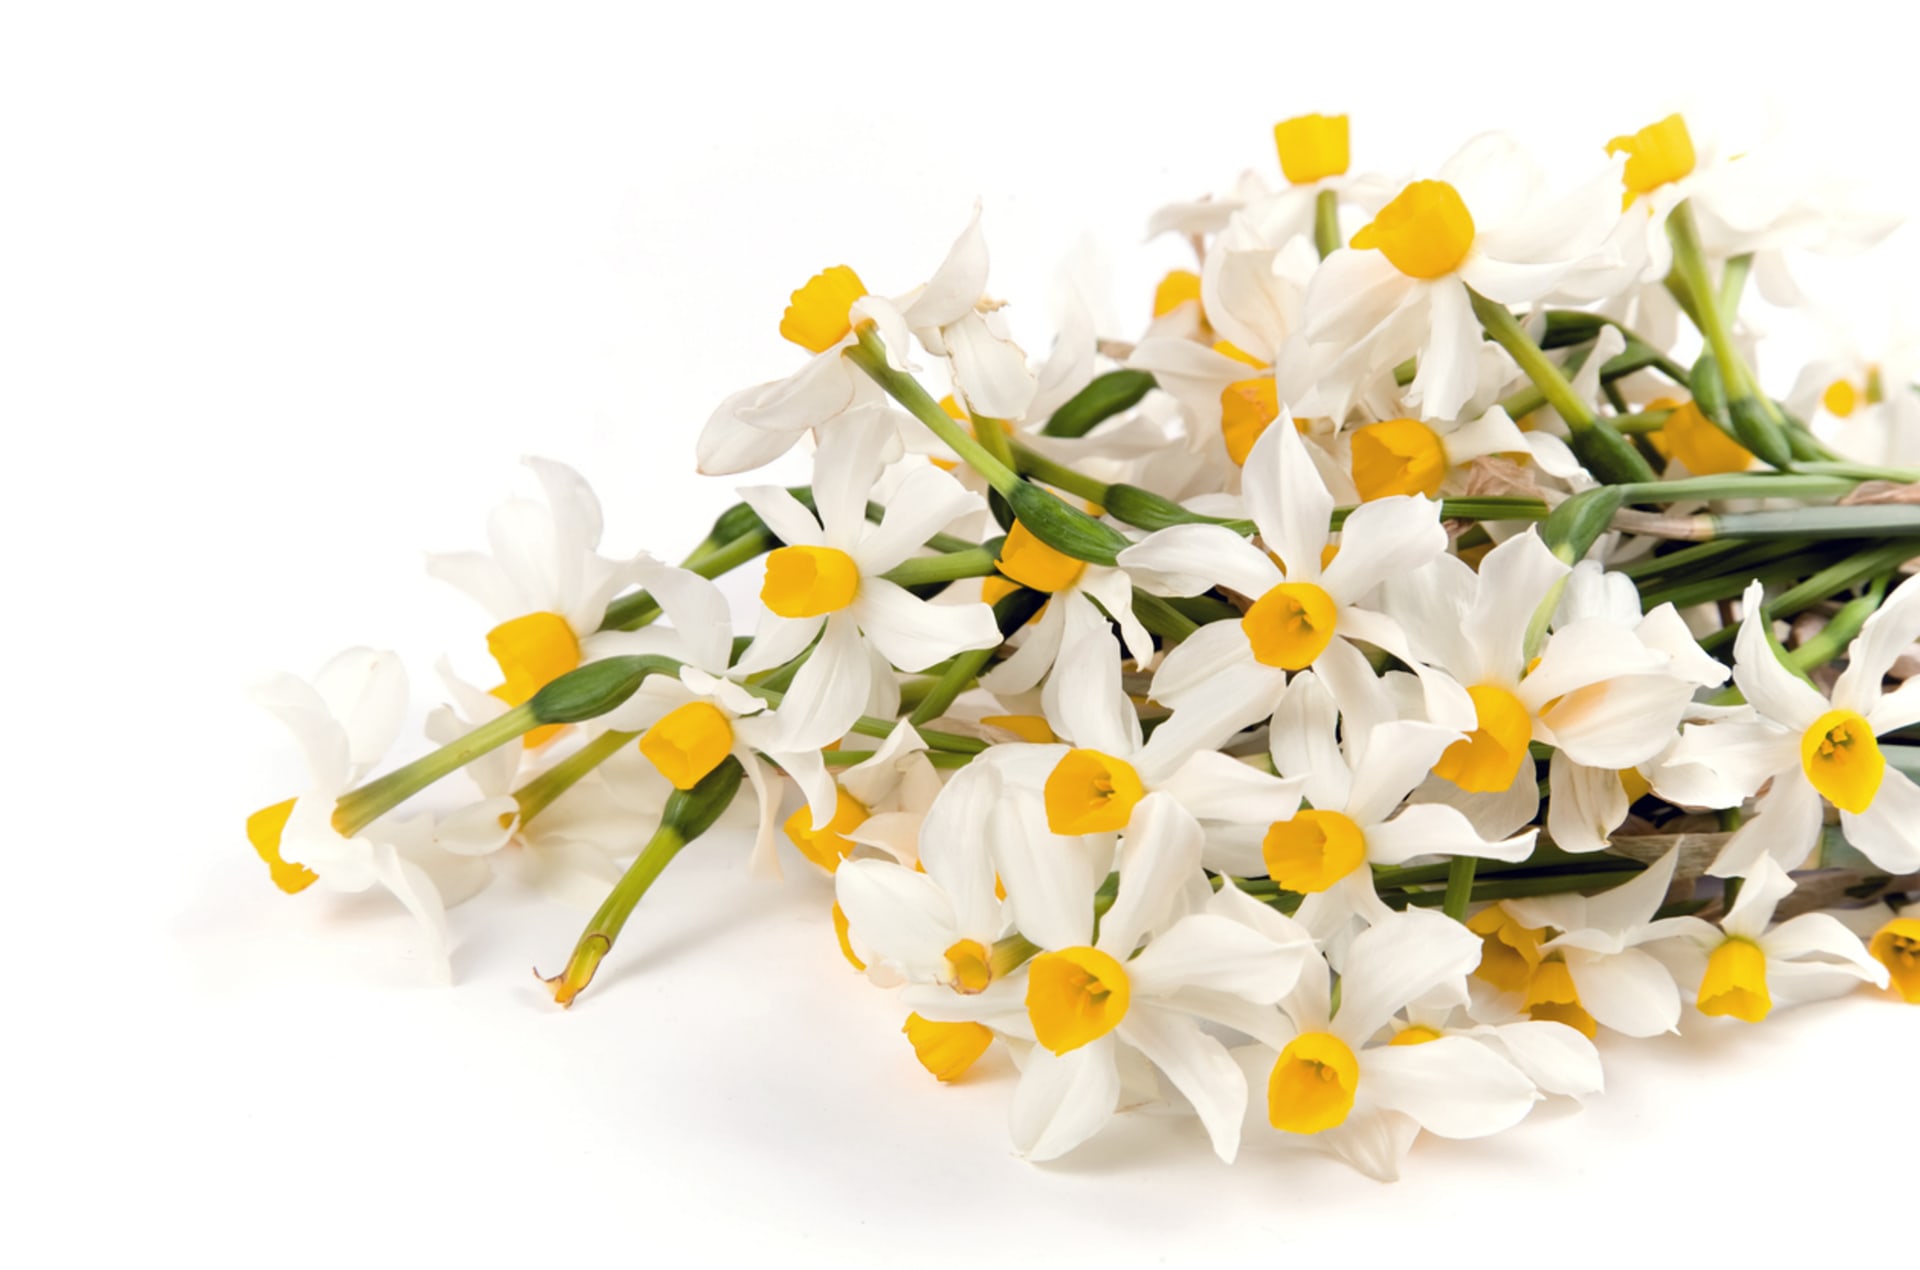 Narcis skalkový (Narcissus canaliculatus)